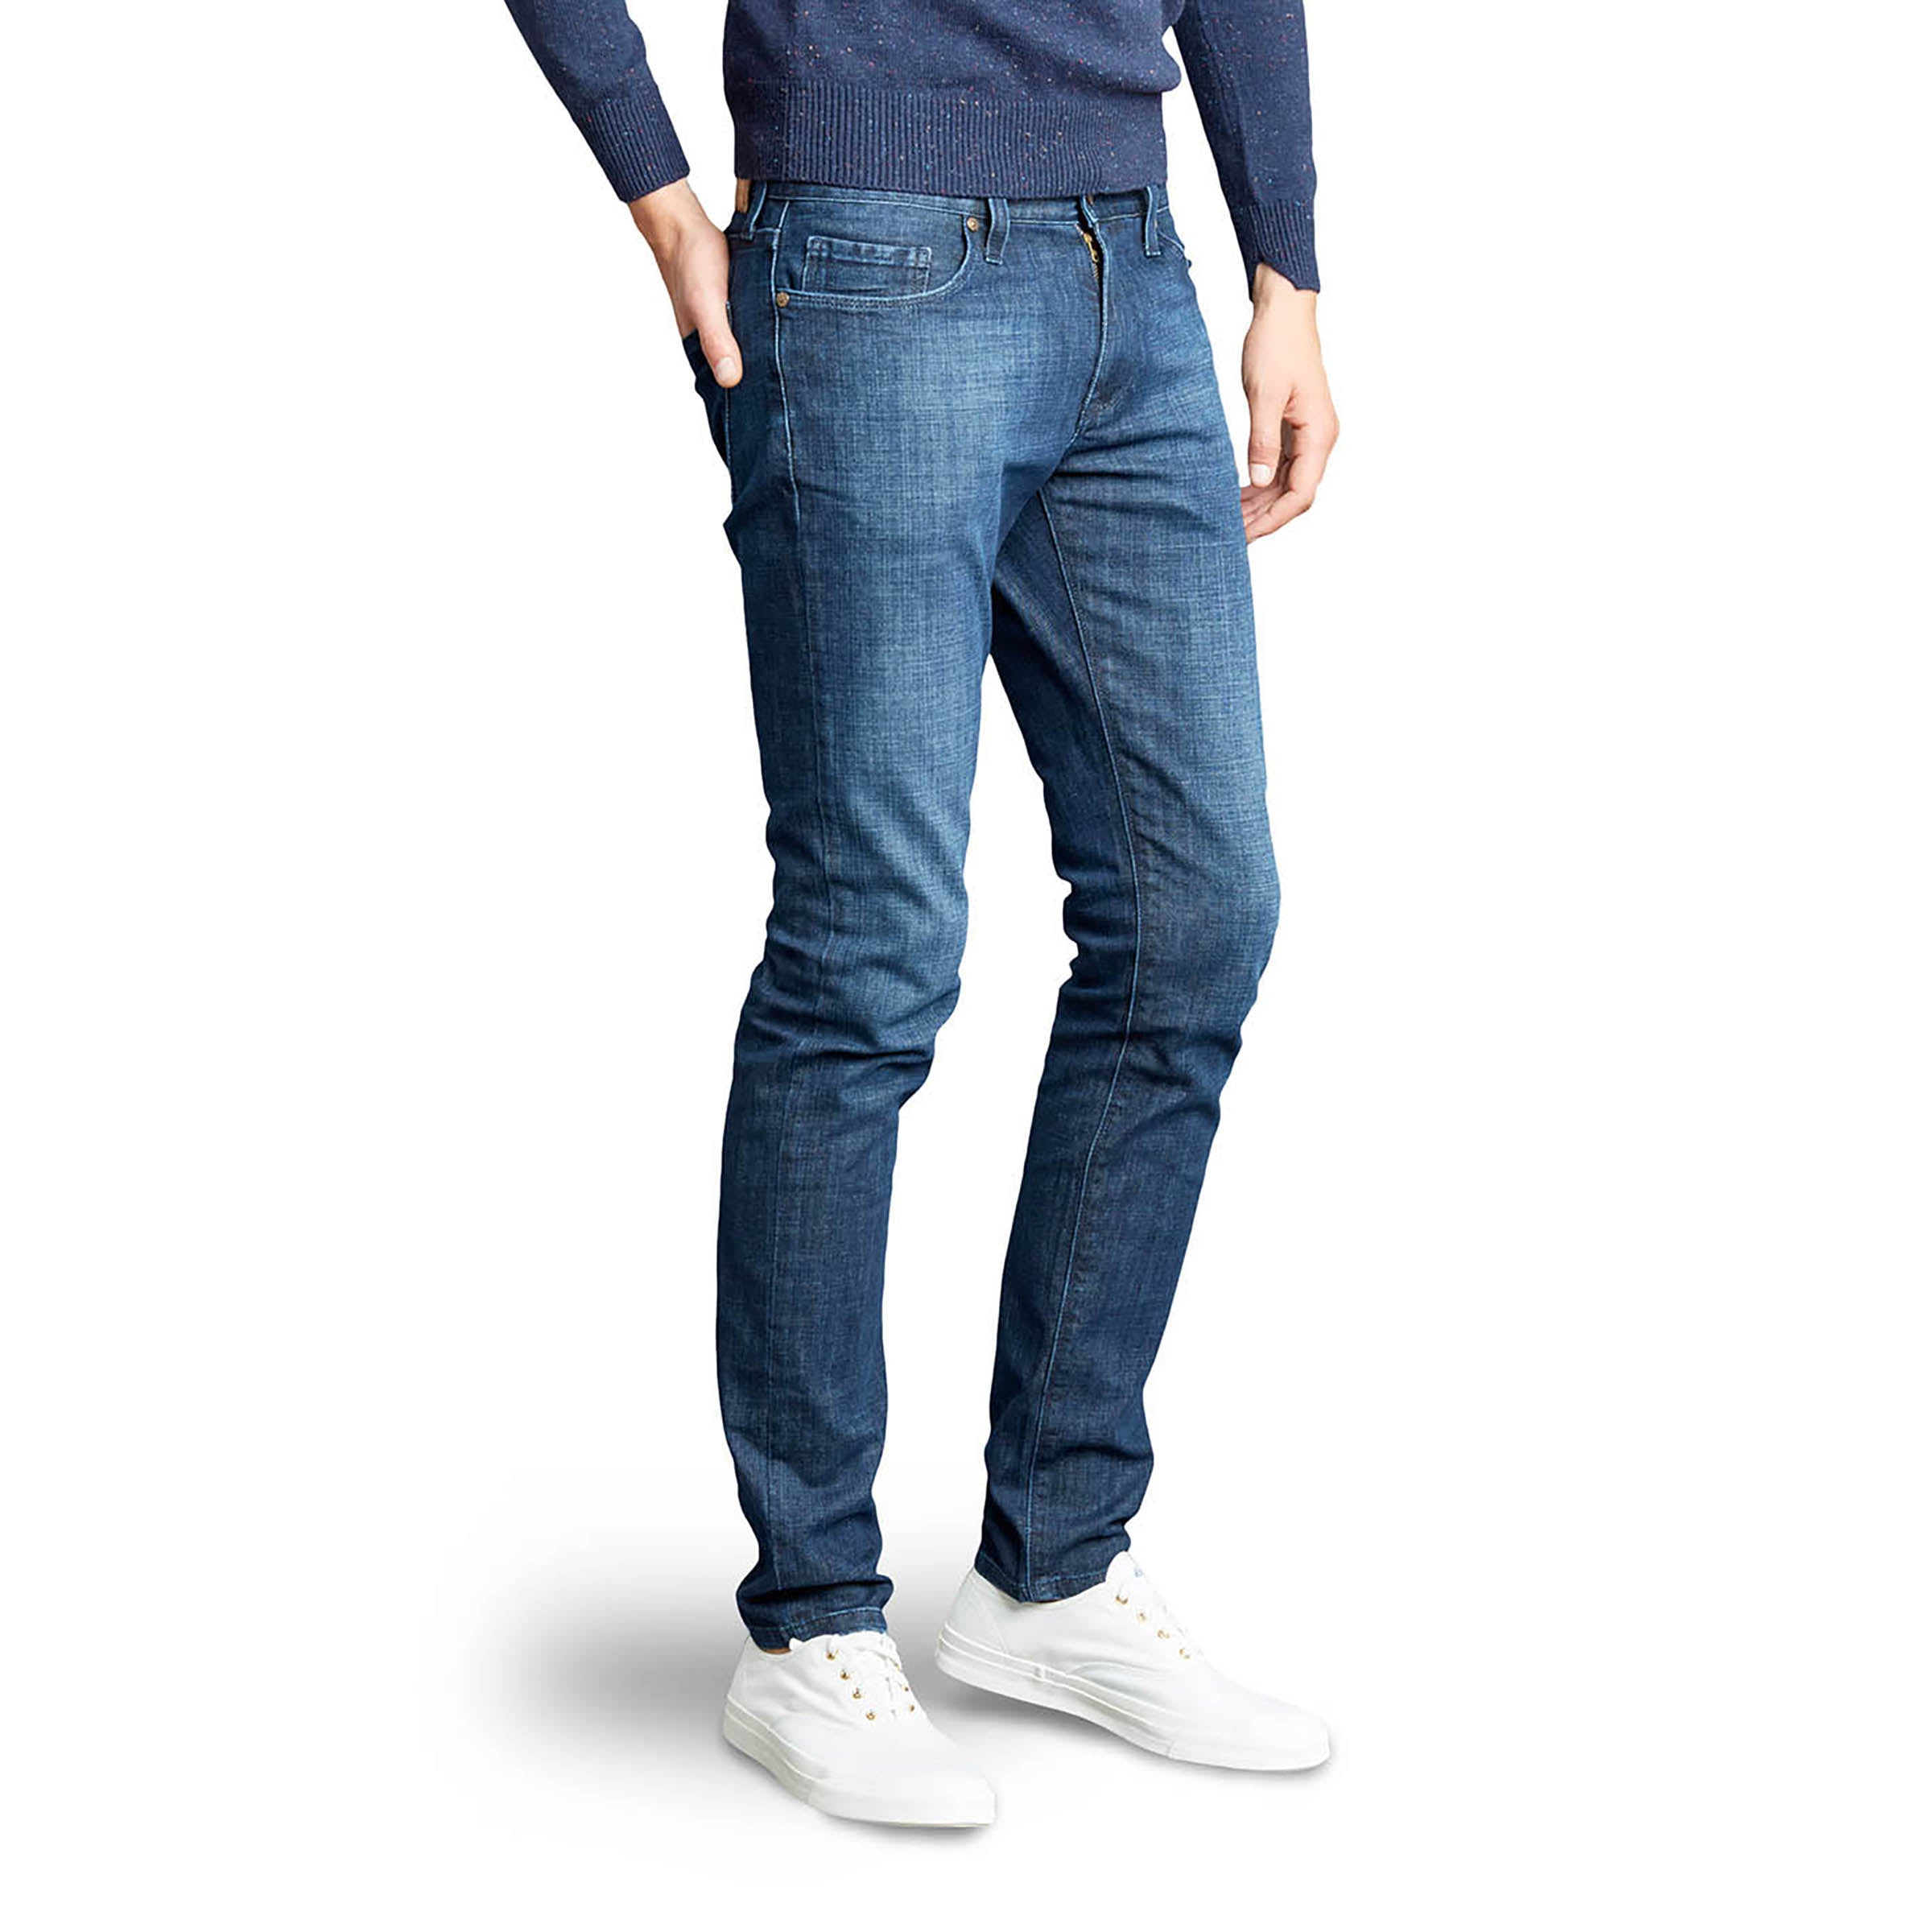 Men wearing Bleu Médium Skinny Mosco Jeans